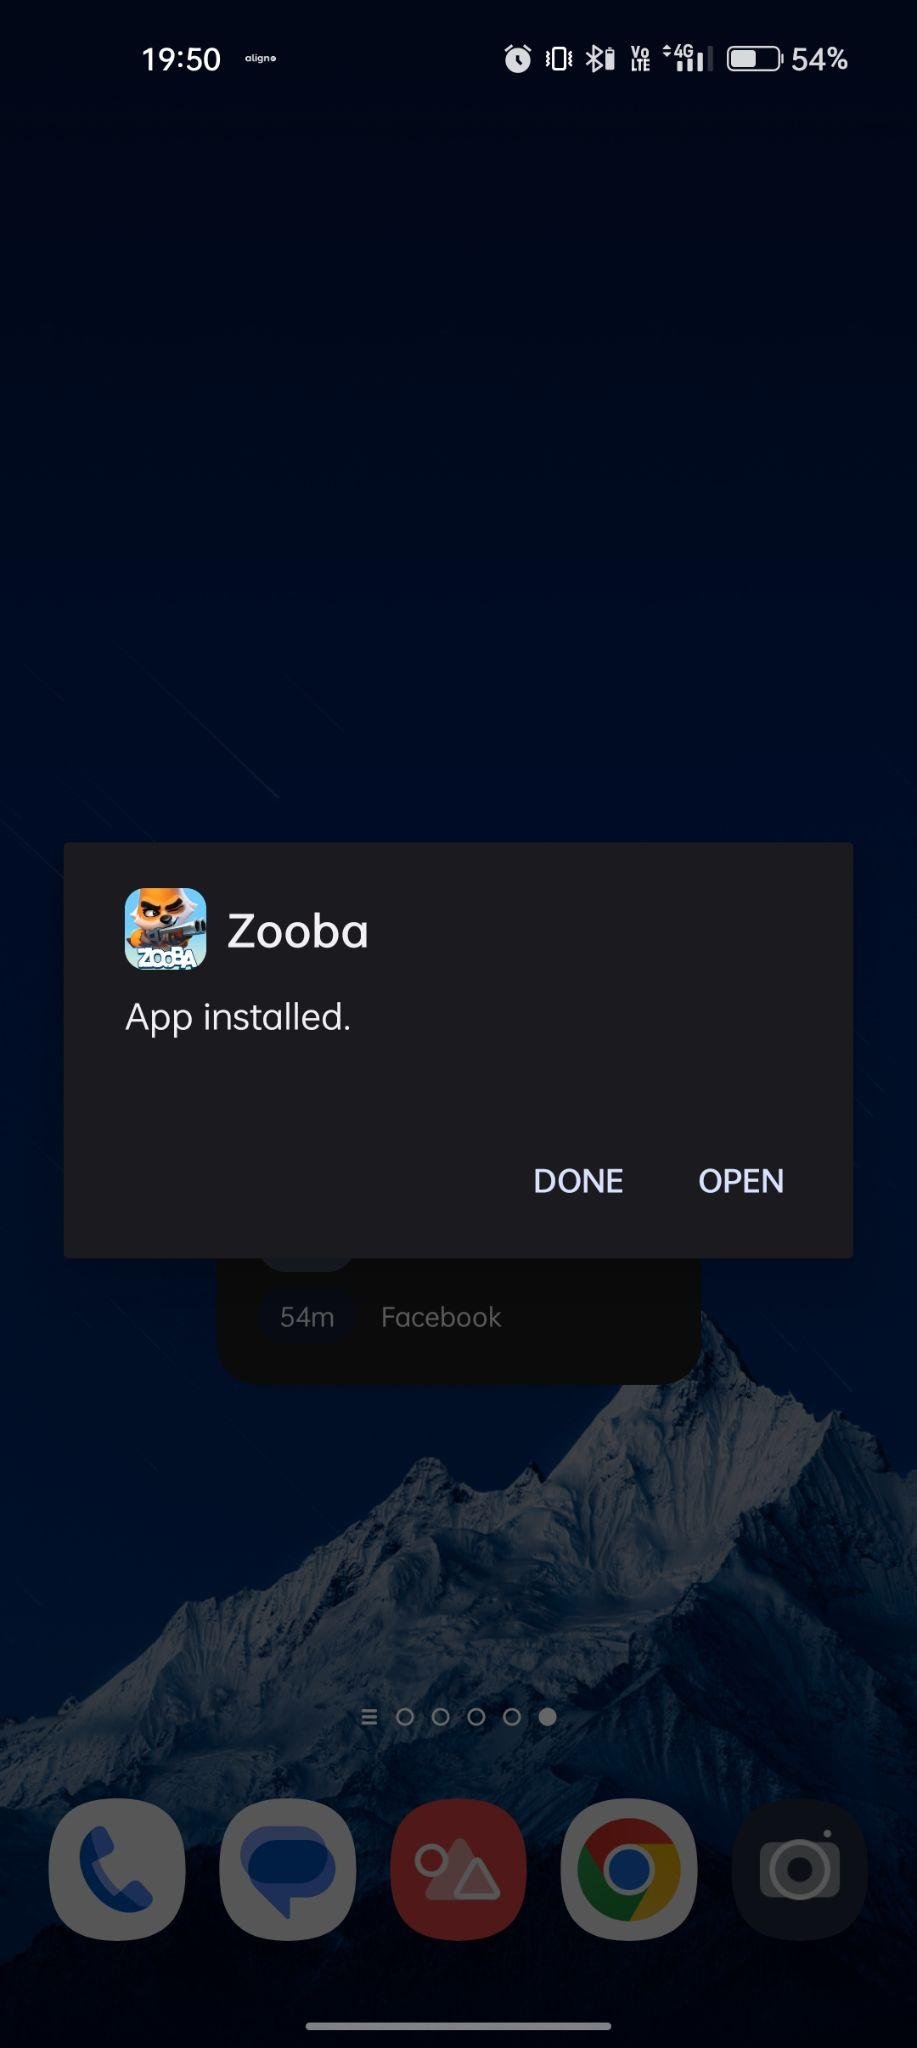 Zooba apk installed